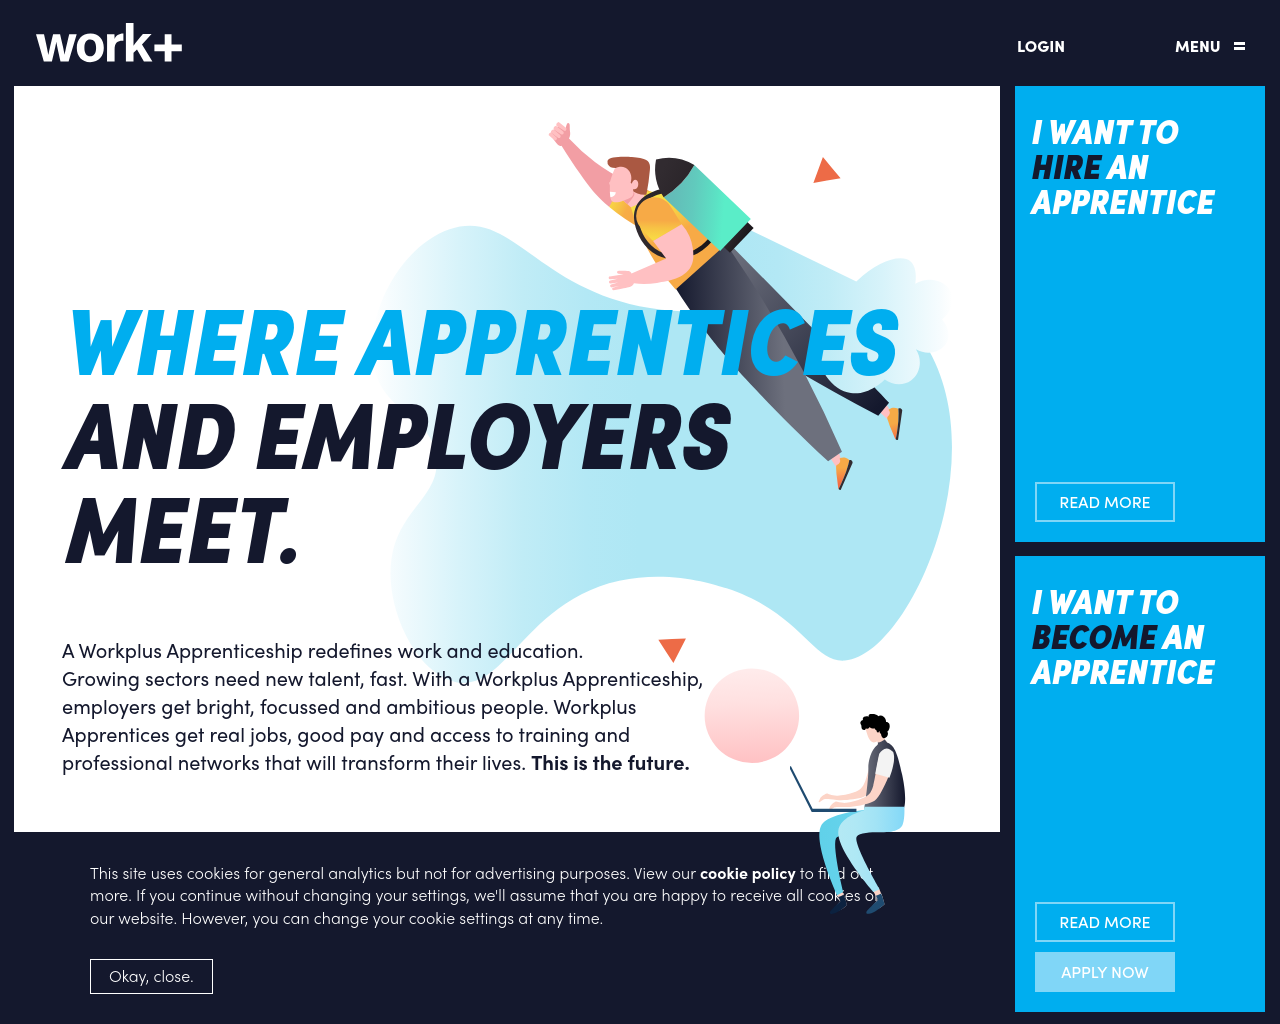 Work plus apprenticeships